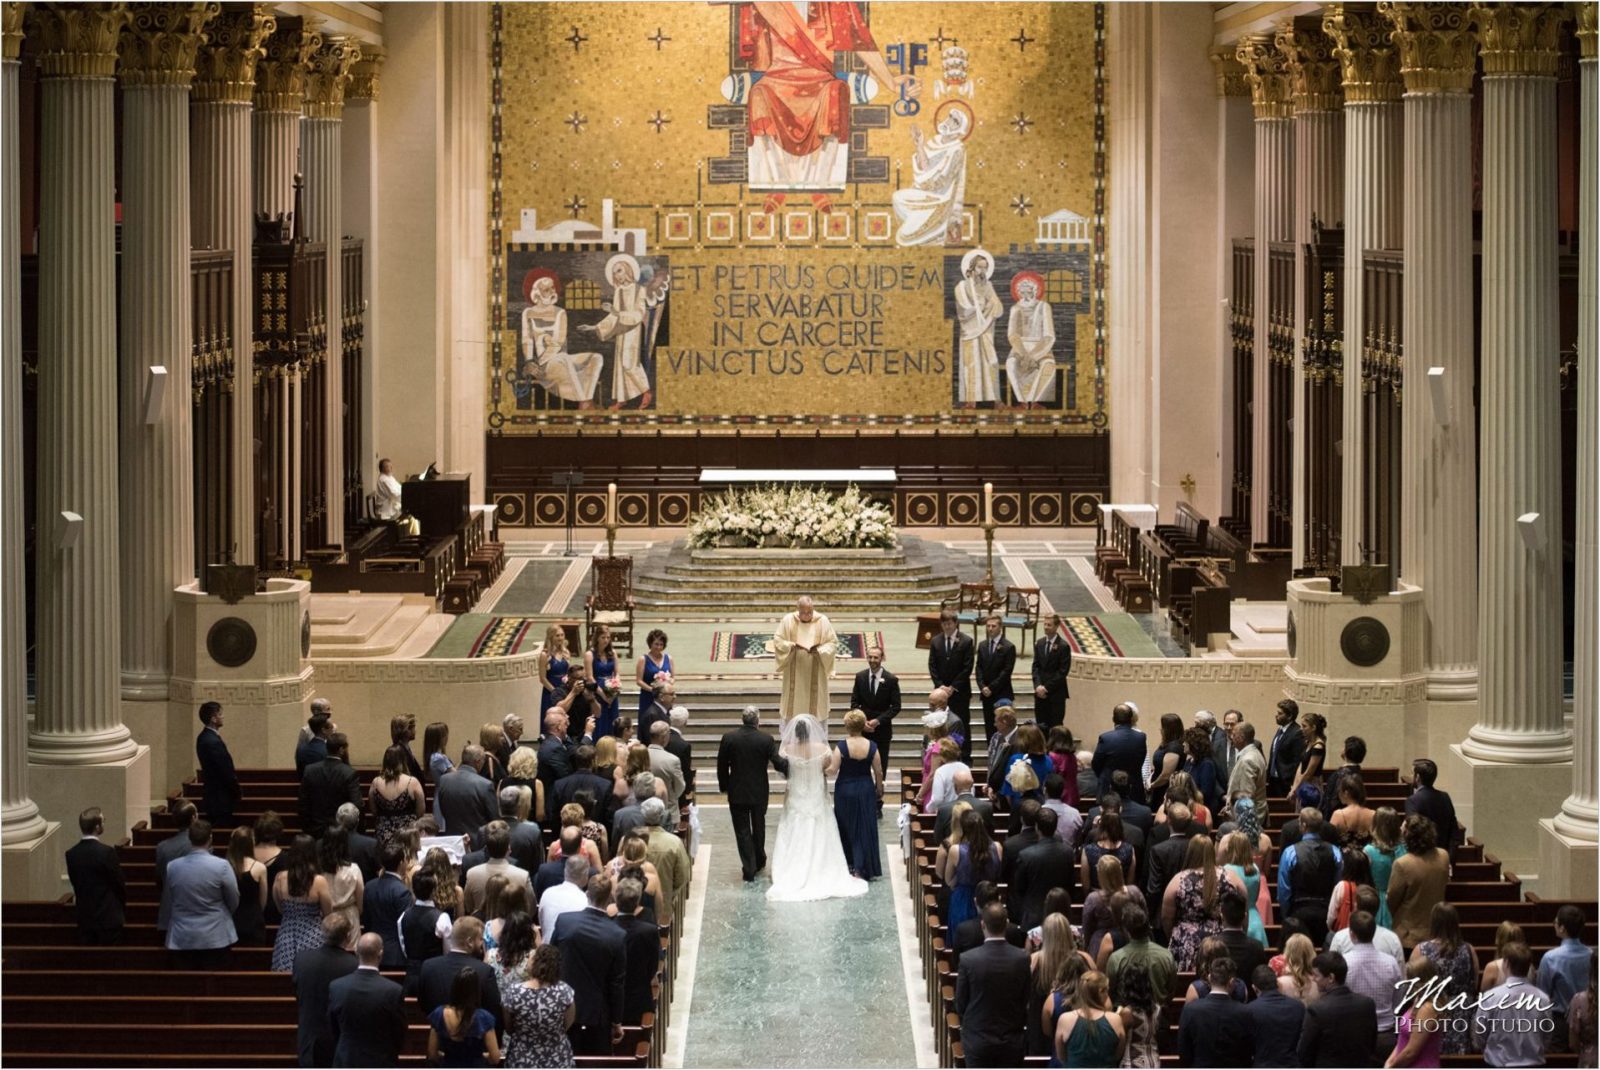 St. Peter in Chains Cincinnati Wedding Ceremony